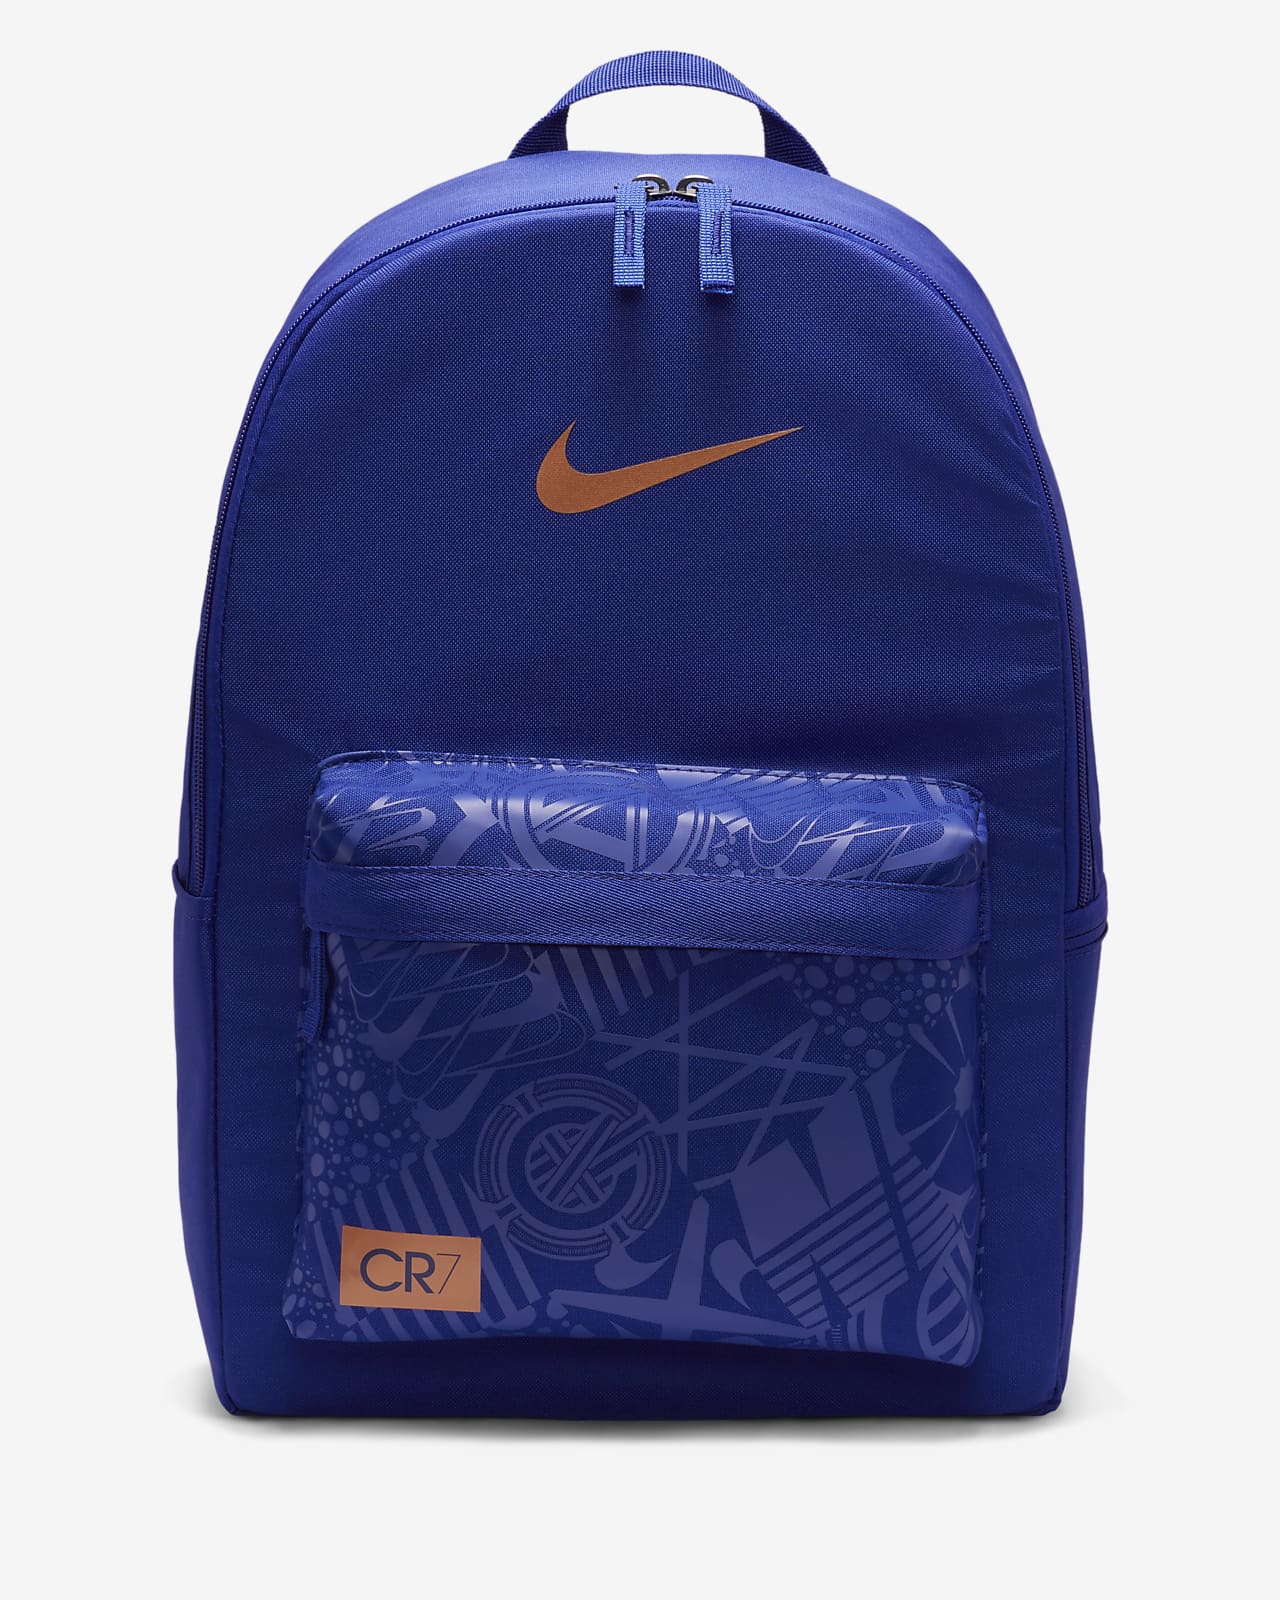 Nike Brasilia Medium Backpack Nike Brasilia 7 Duffel Bags, backpack,  luggage Bags, backpack png | PNGEgg